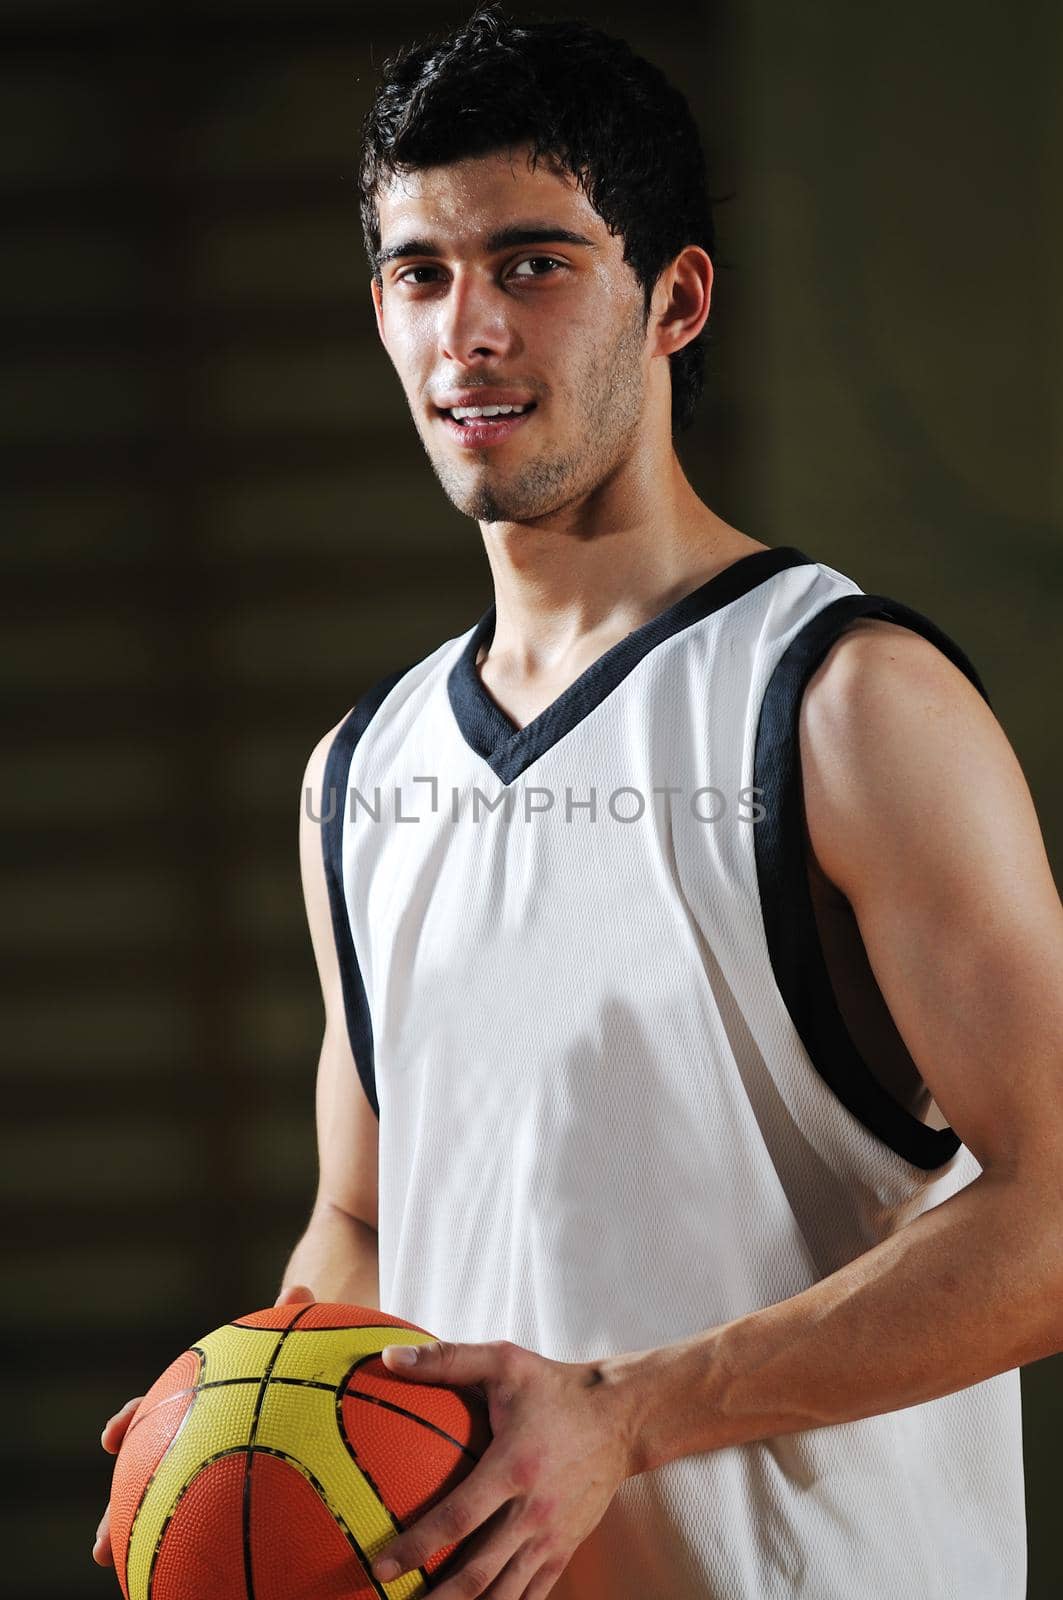 basket ball game player portrait by dotshock